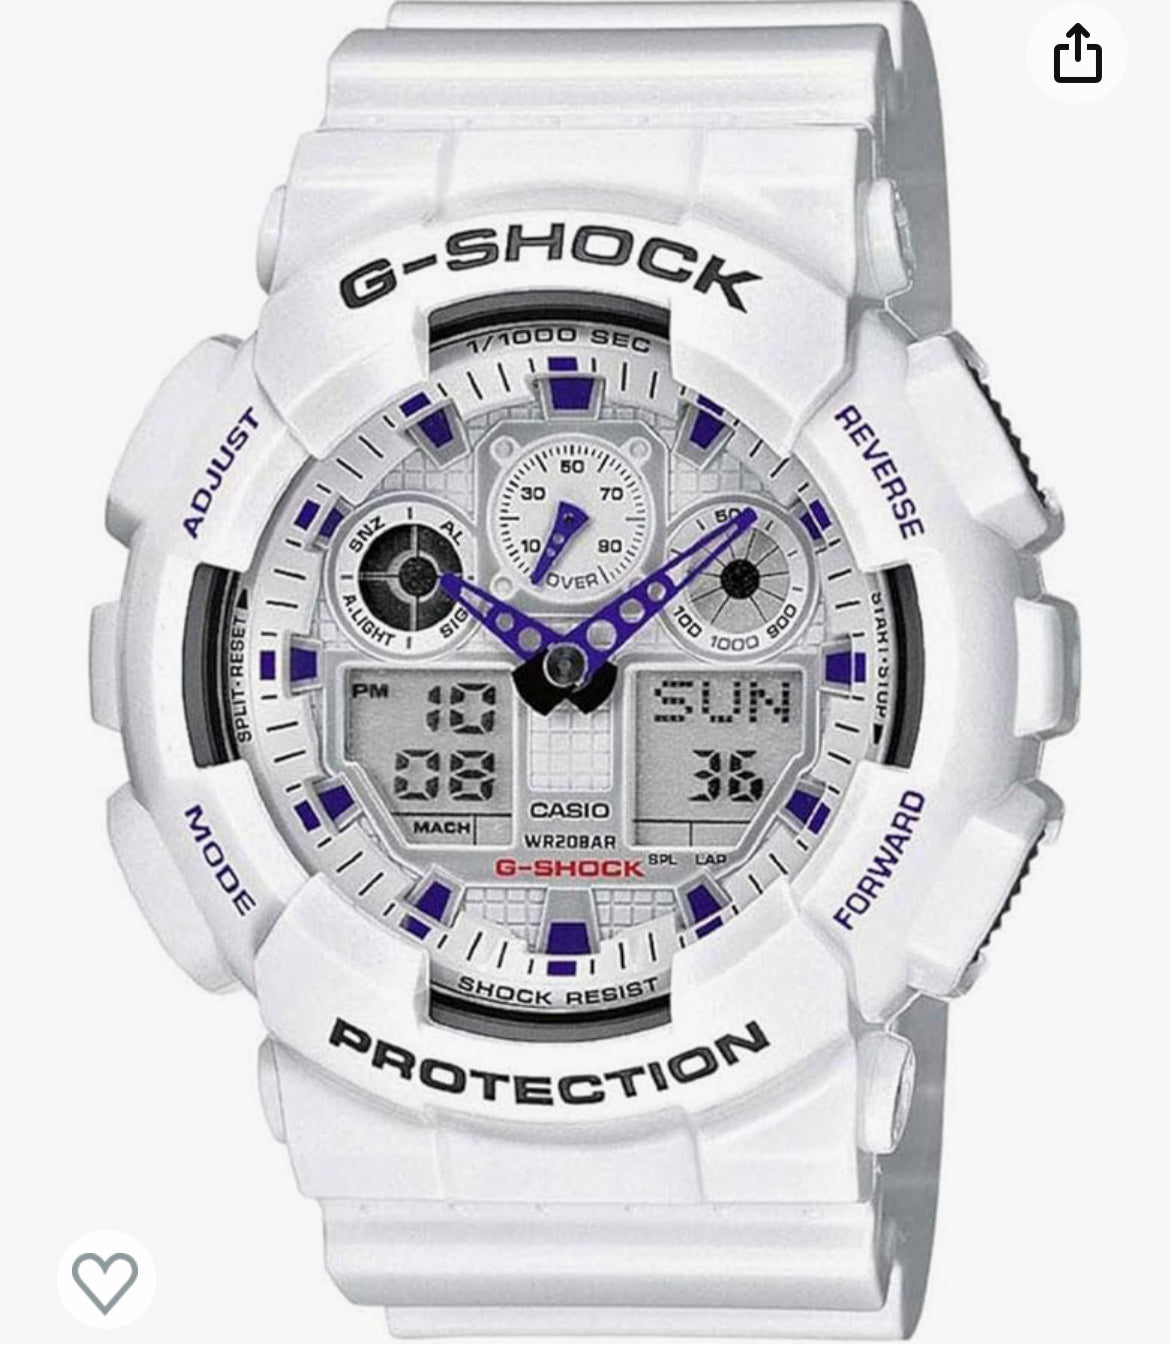 A14) G-Shock Ga100 Casual Digital Watch white